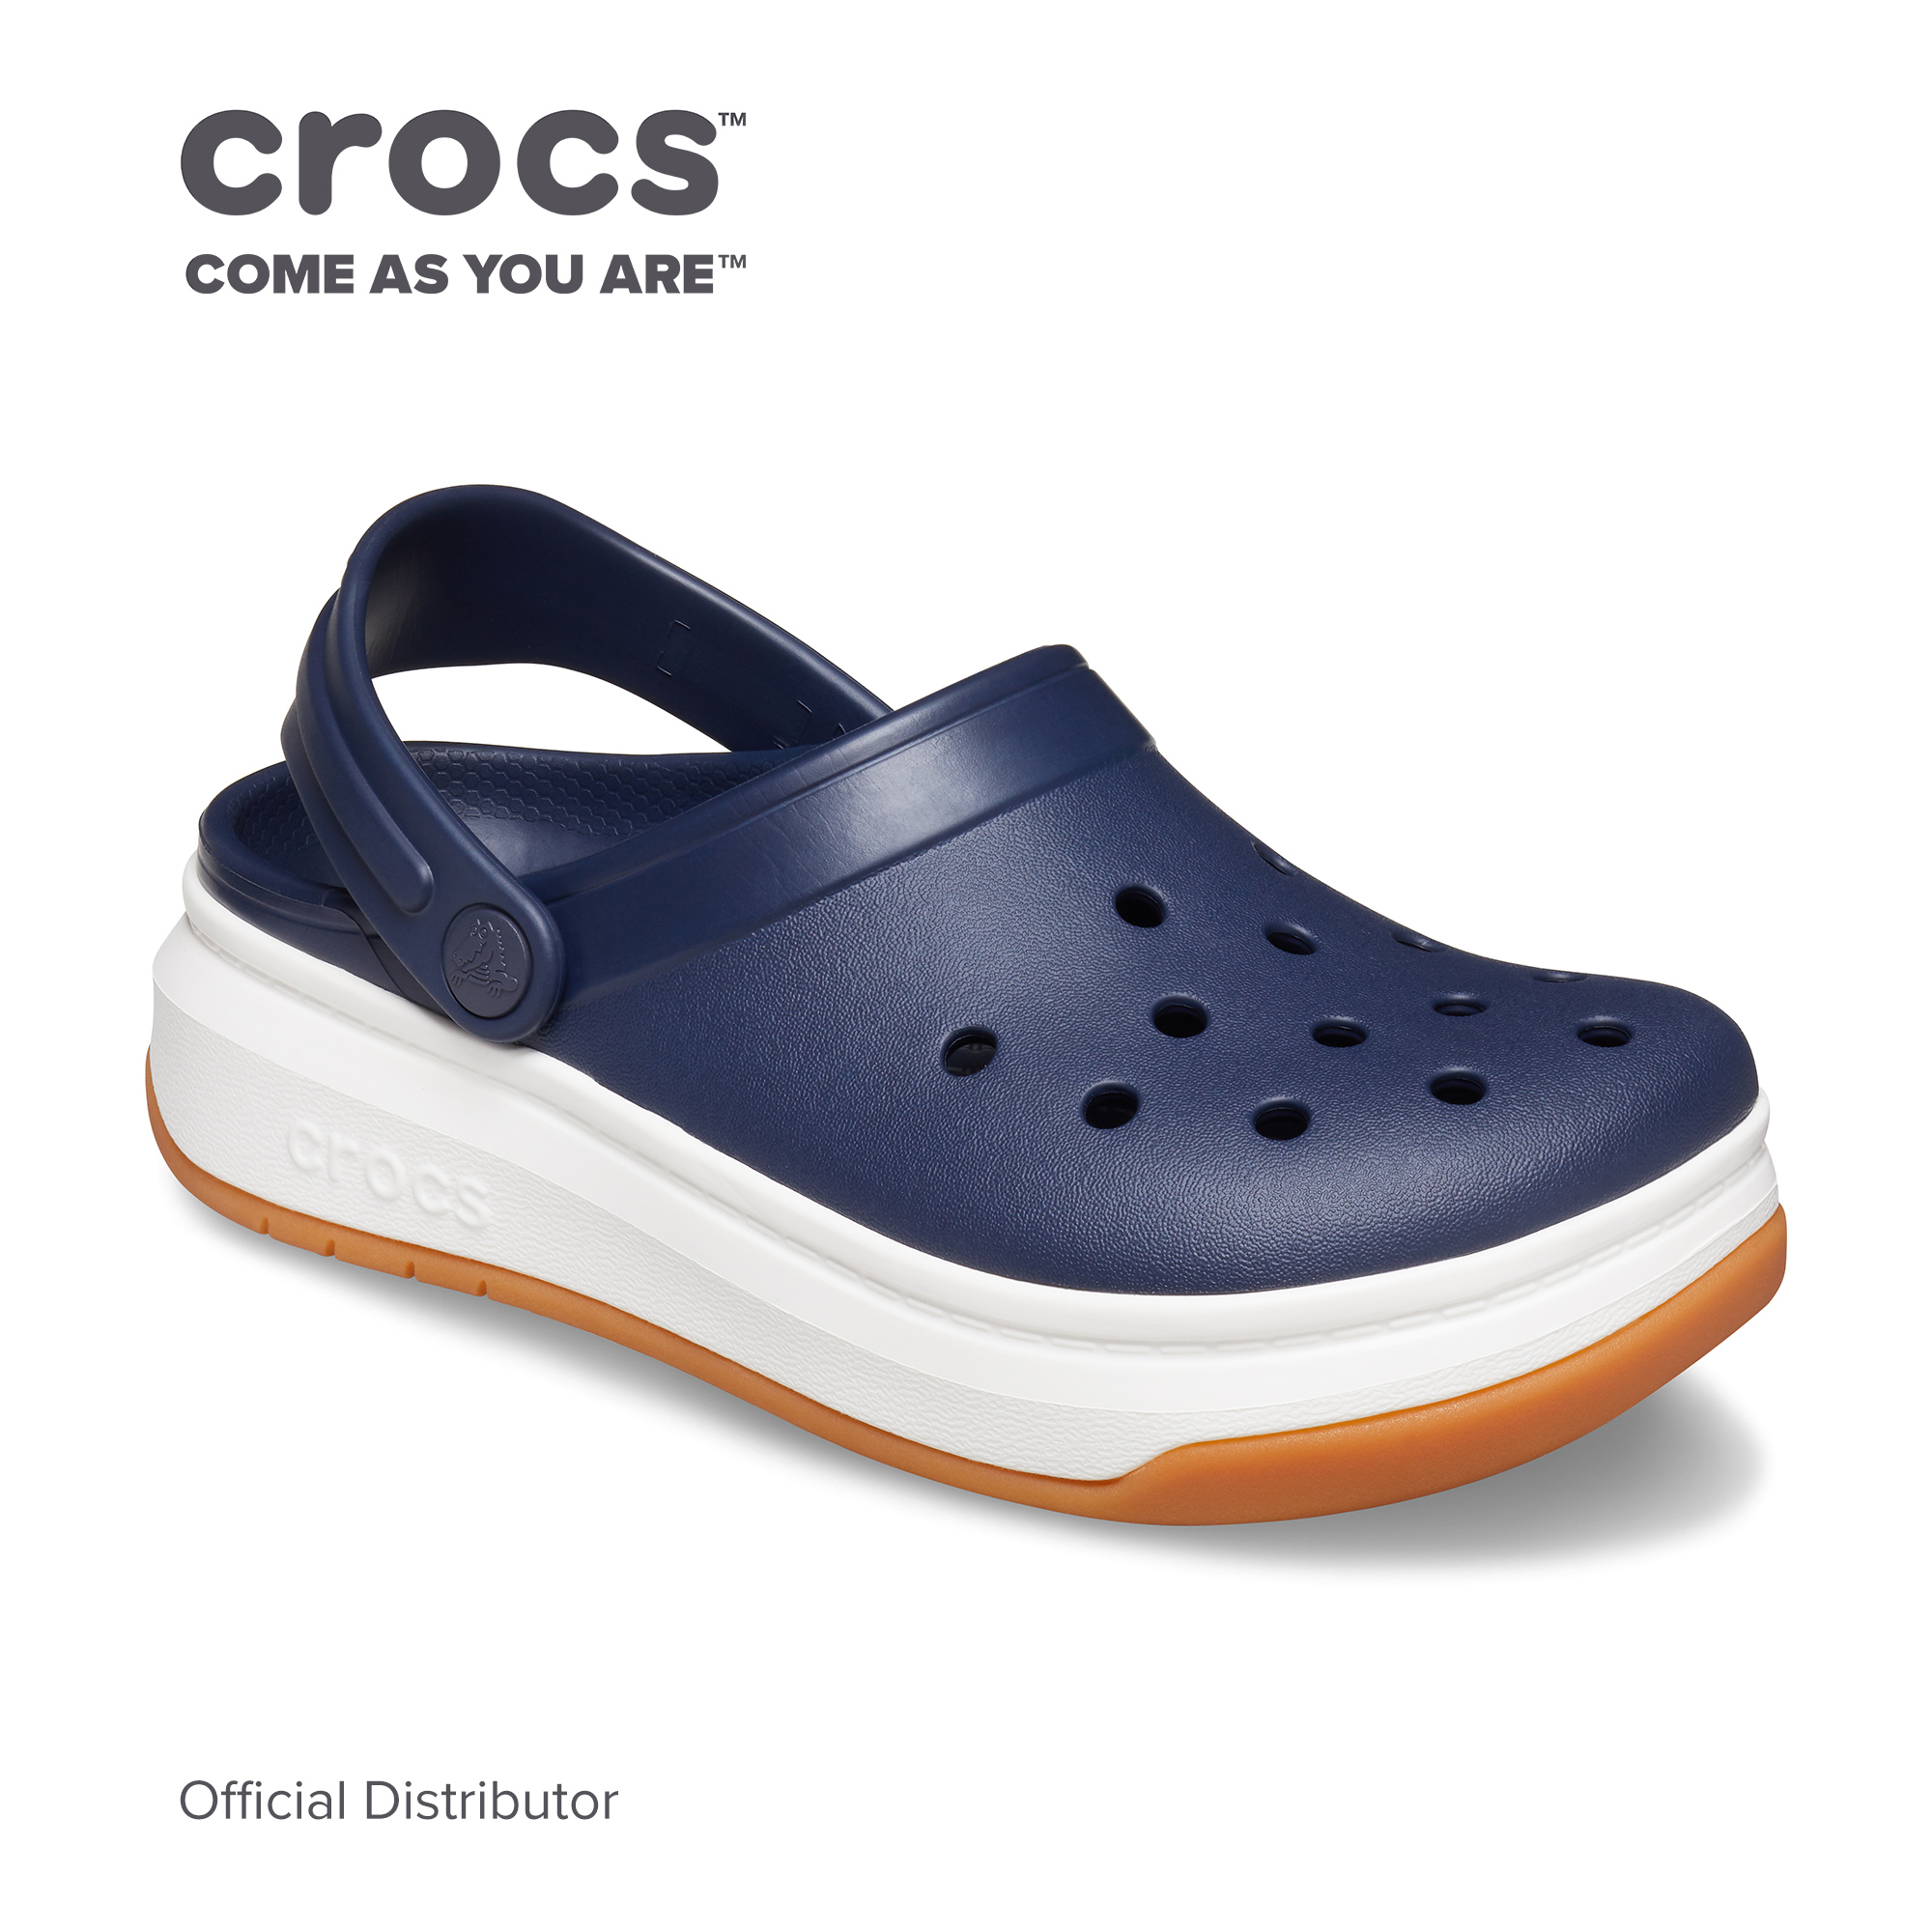 deals on crocs shoes